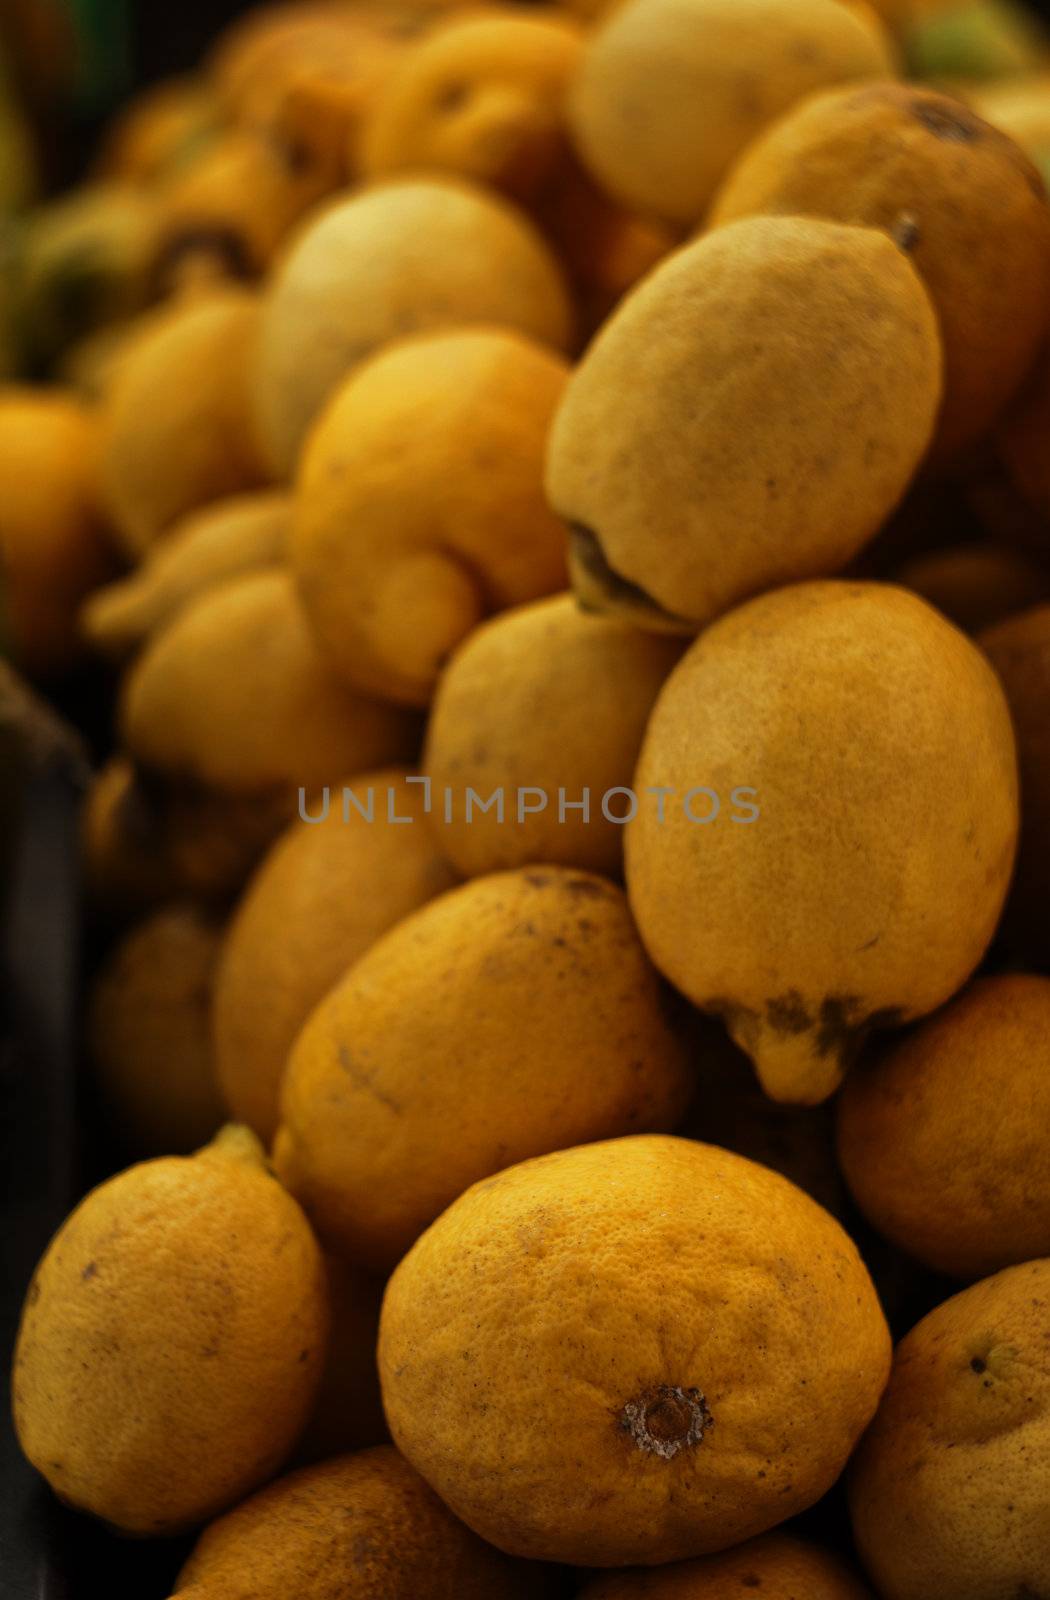 Group of fresh lemons by gandolfocannatella